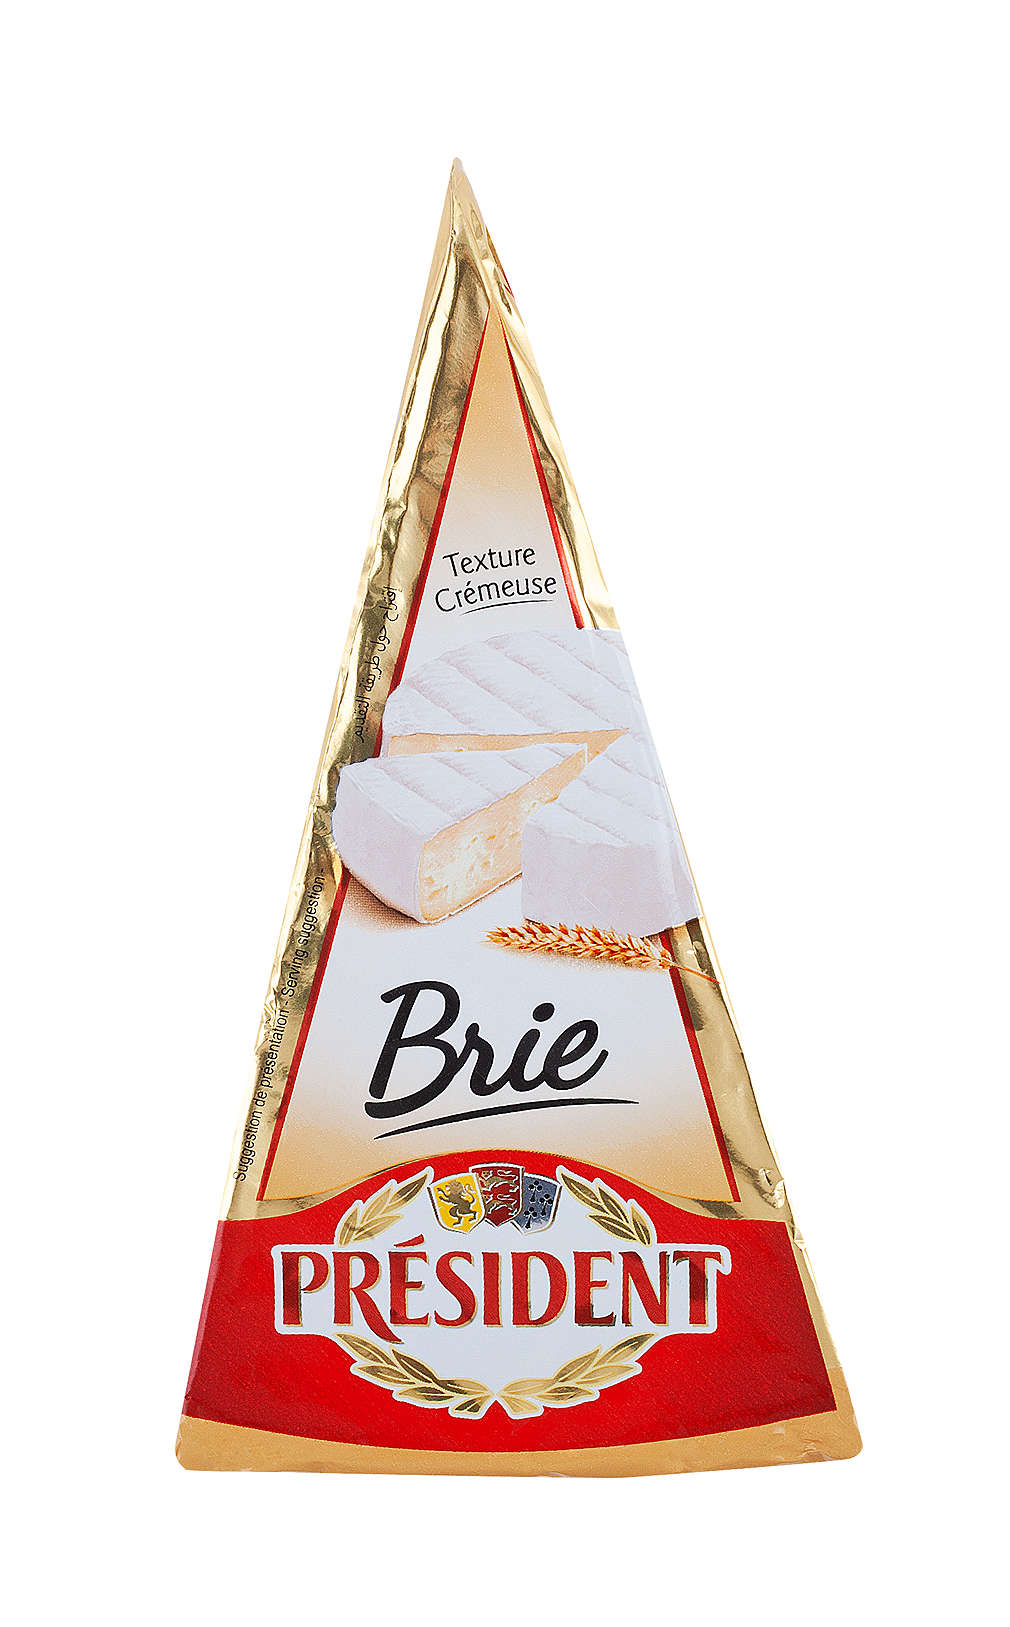 Fotografija ponude President Brie, meki sir